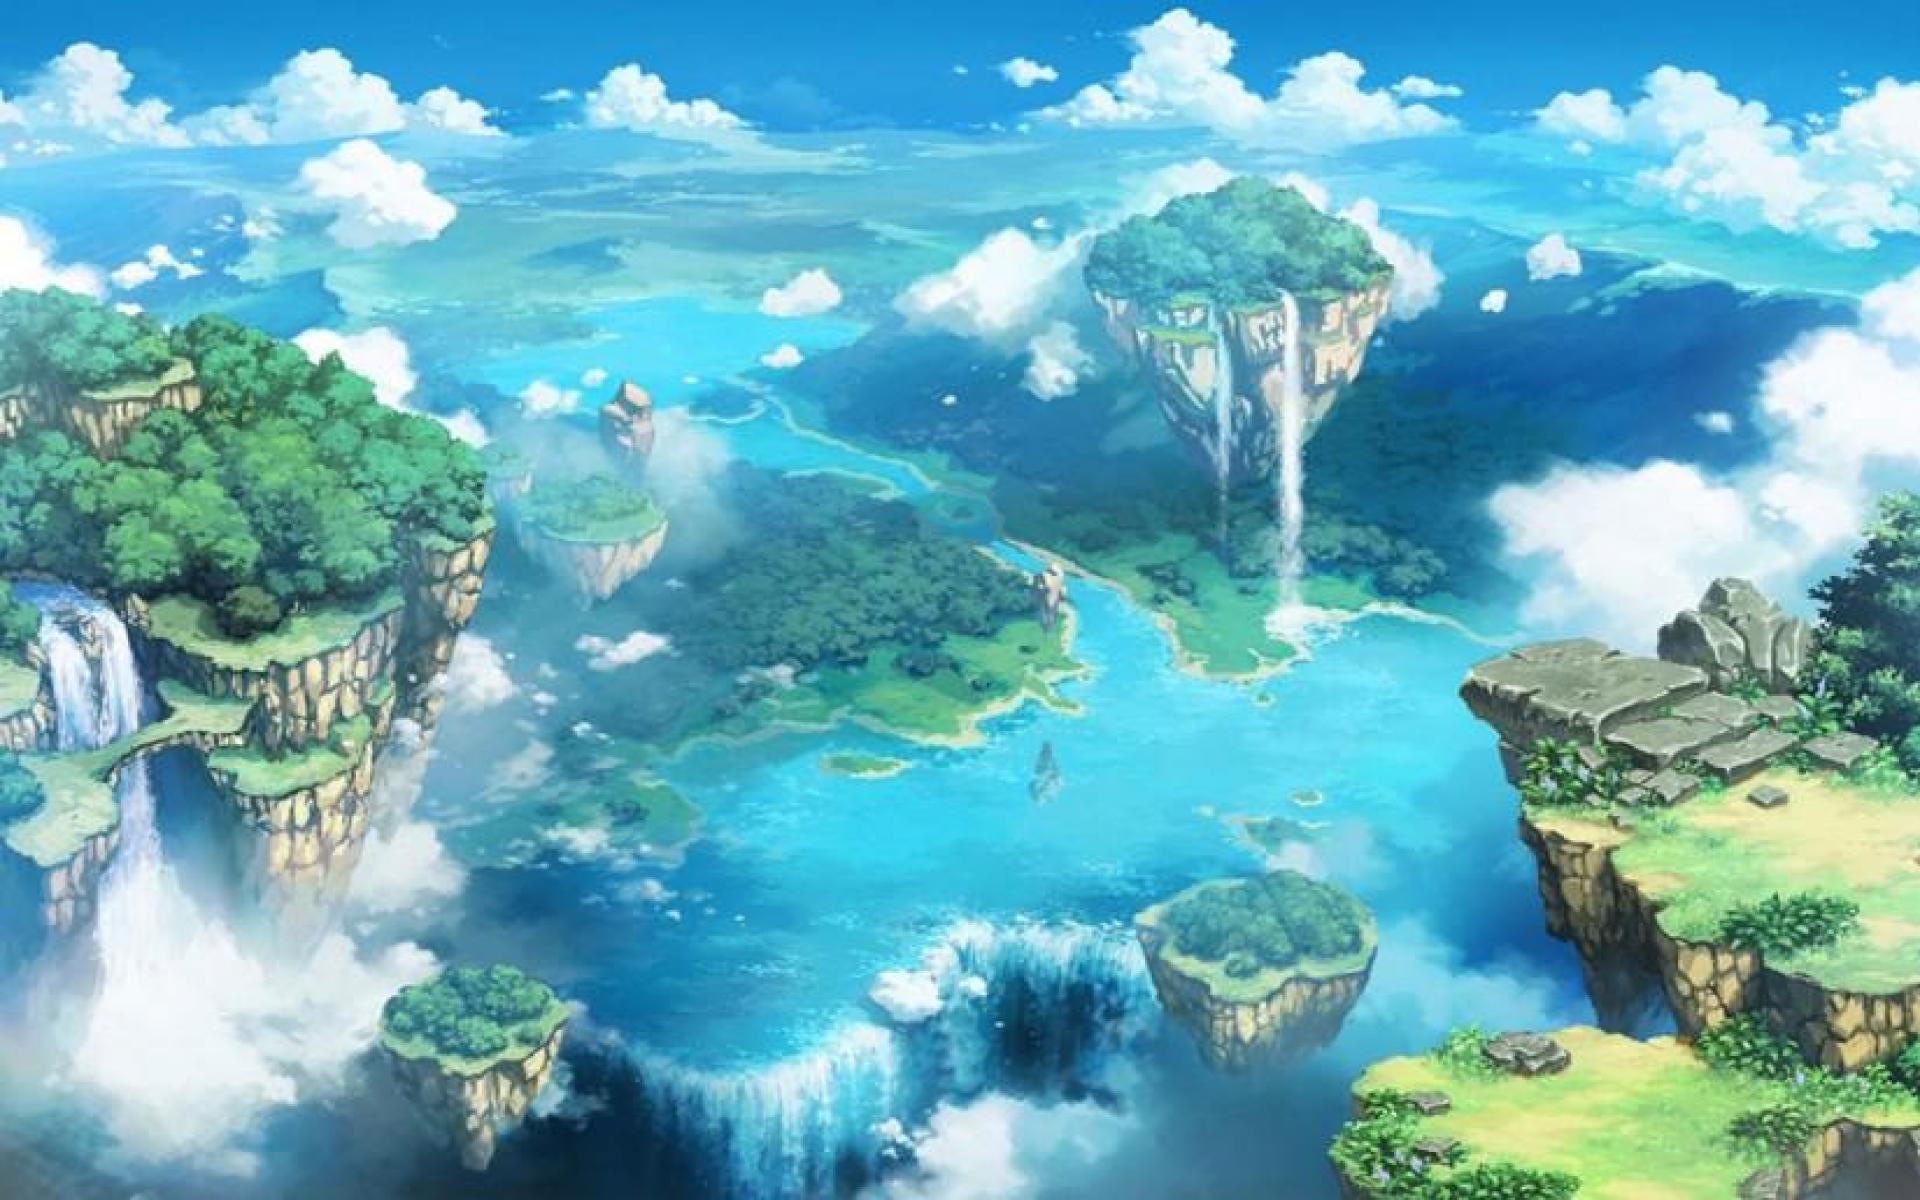 Anime Scenery Wallpaper Background Anime Scenery